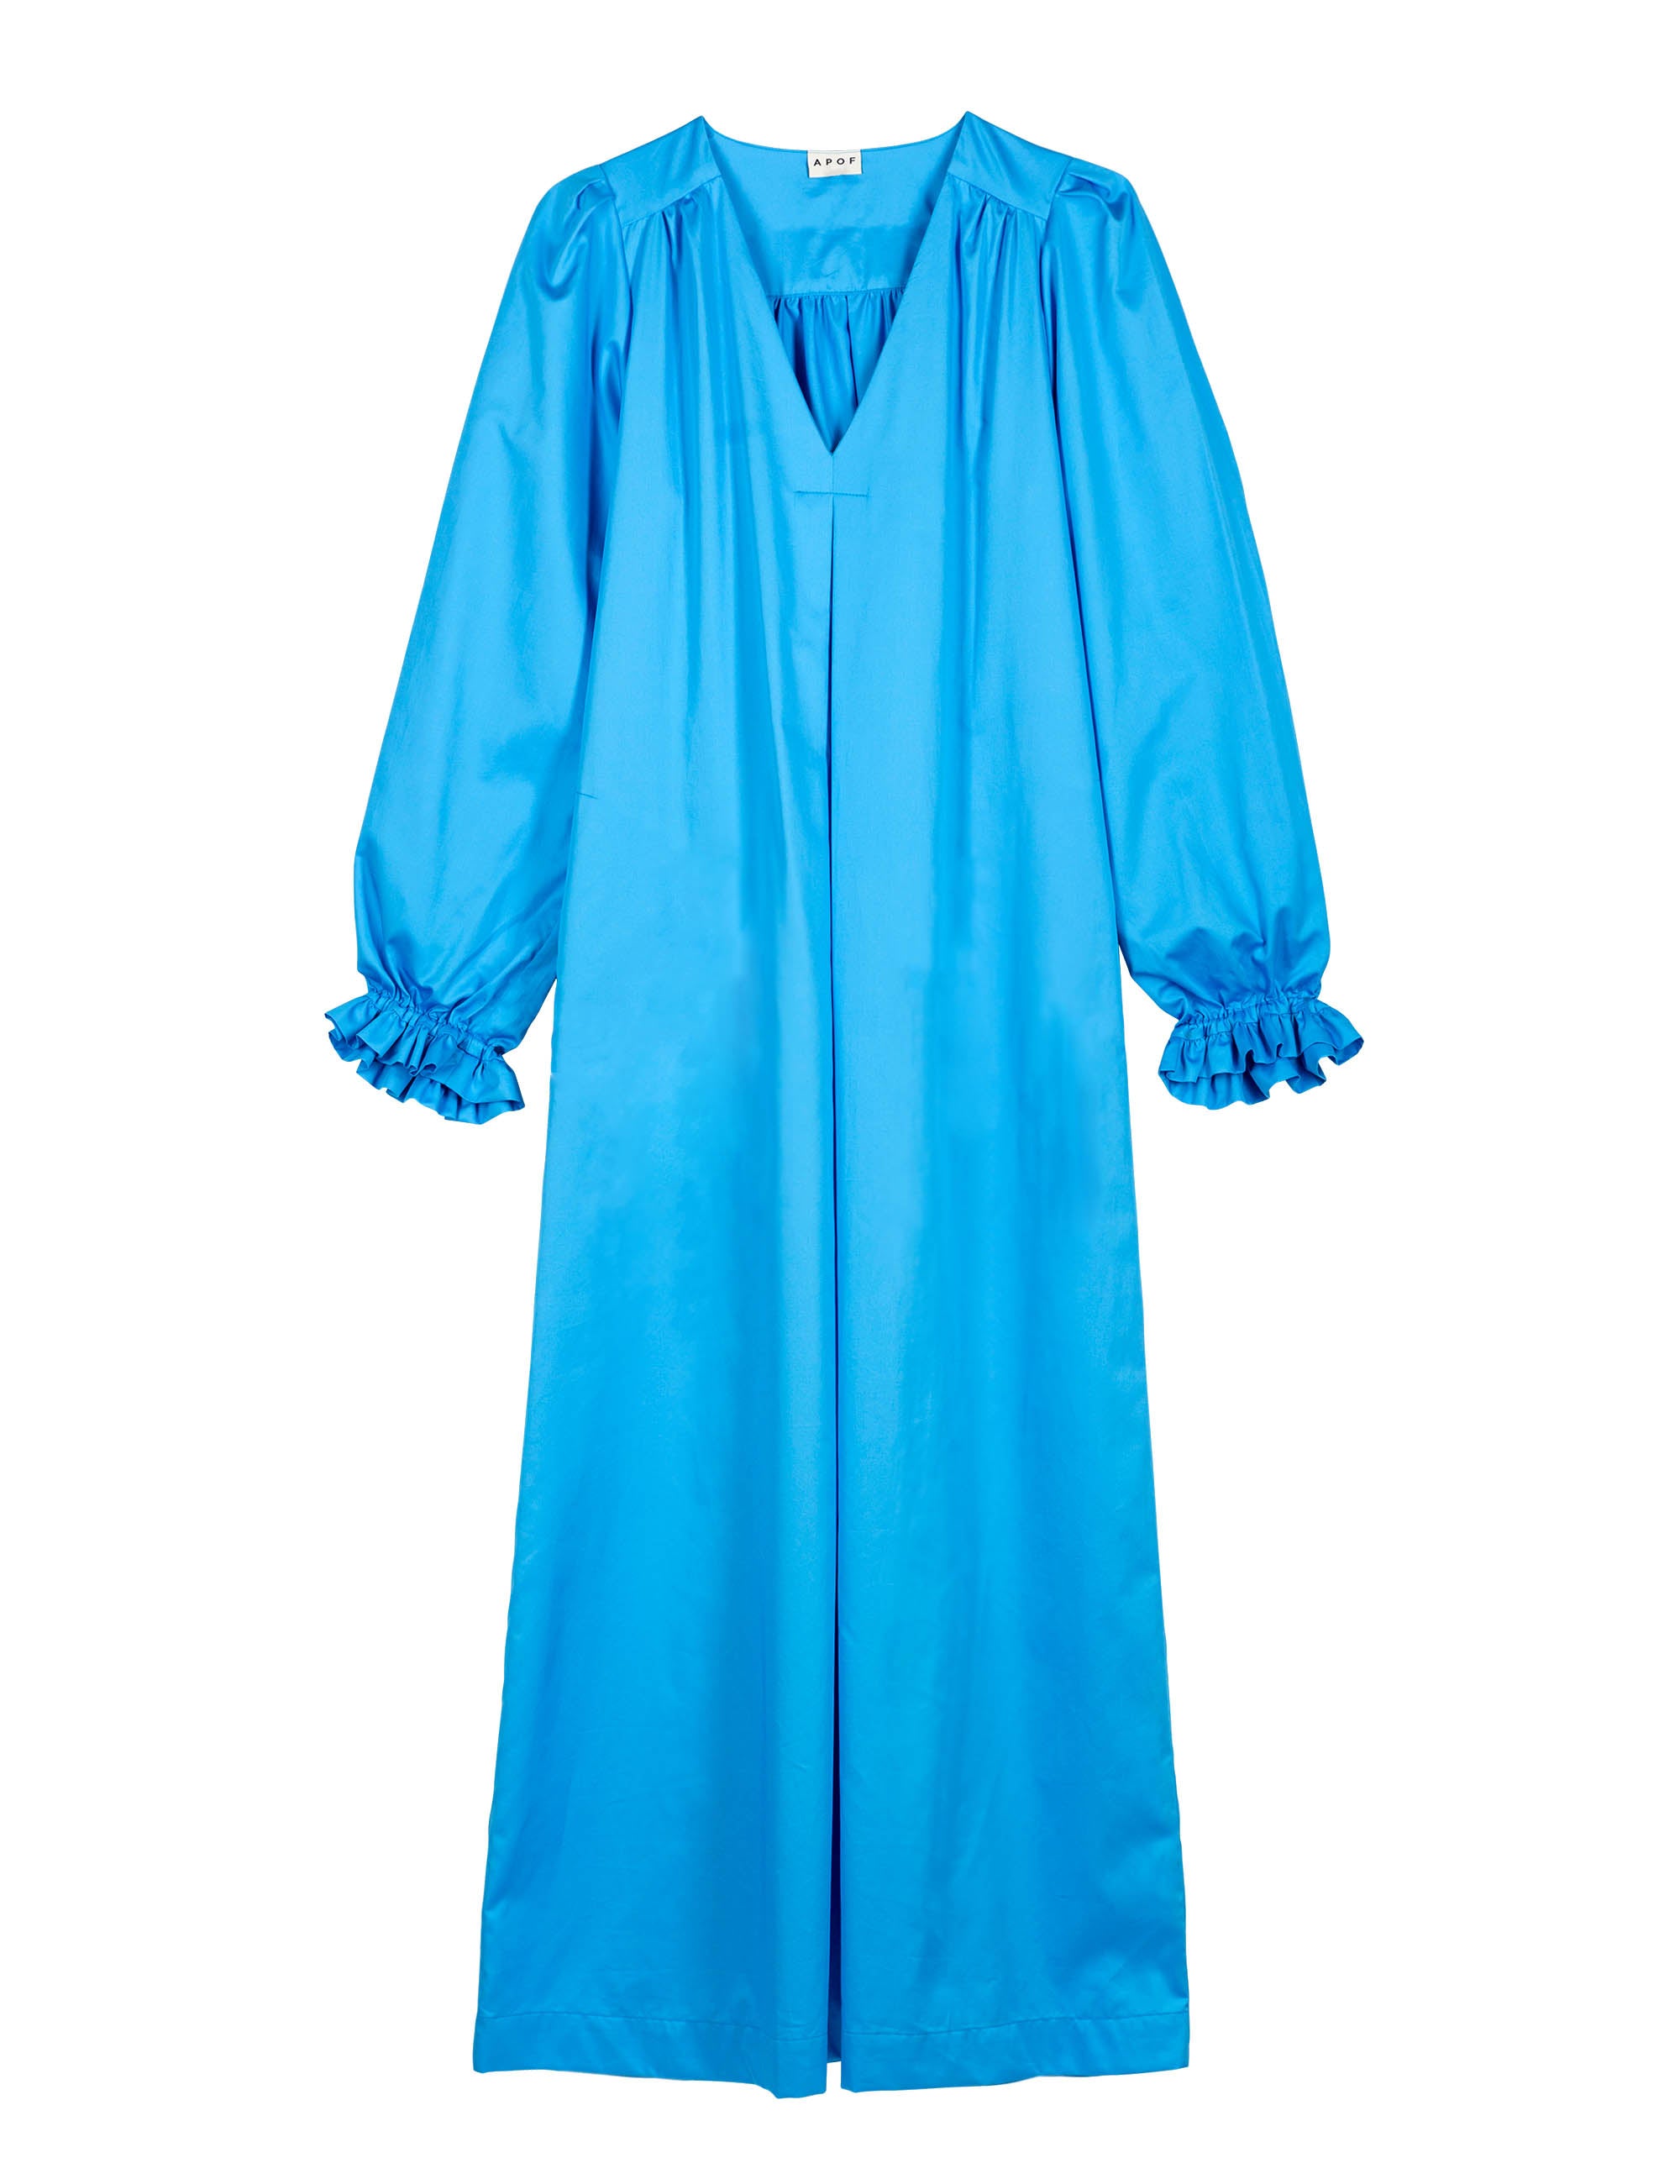 MIKELA DRESS - BRIGHT BLUE